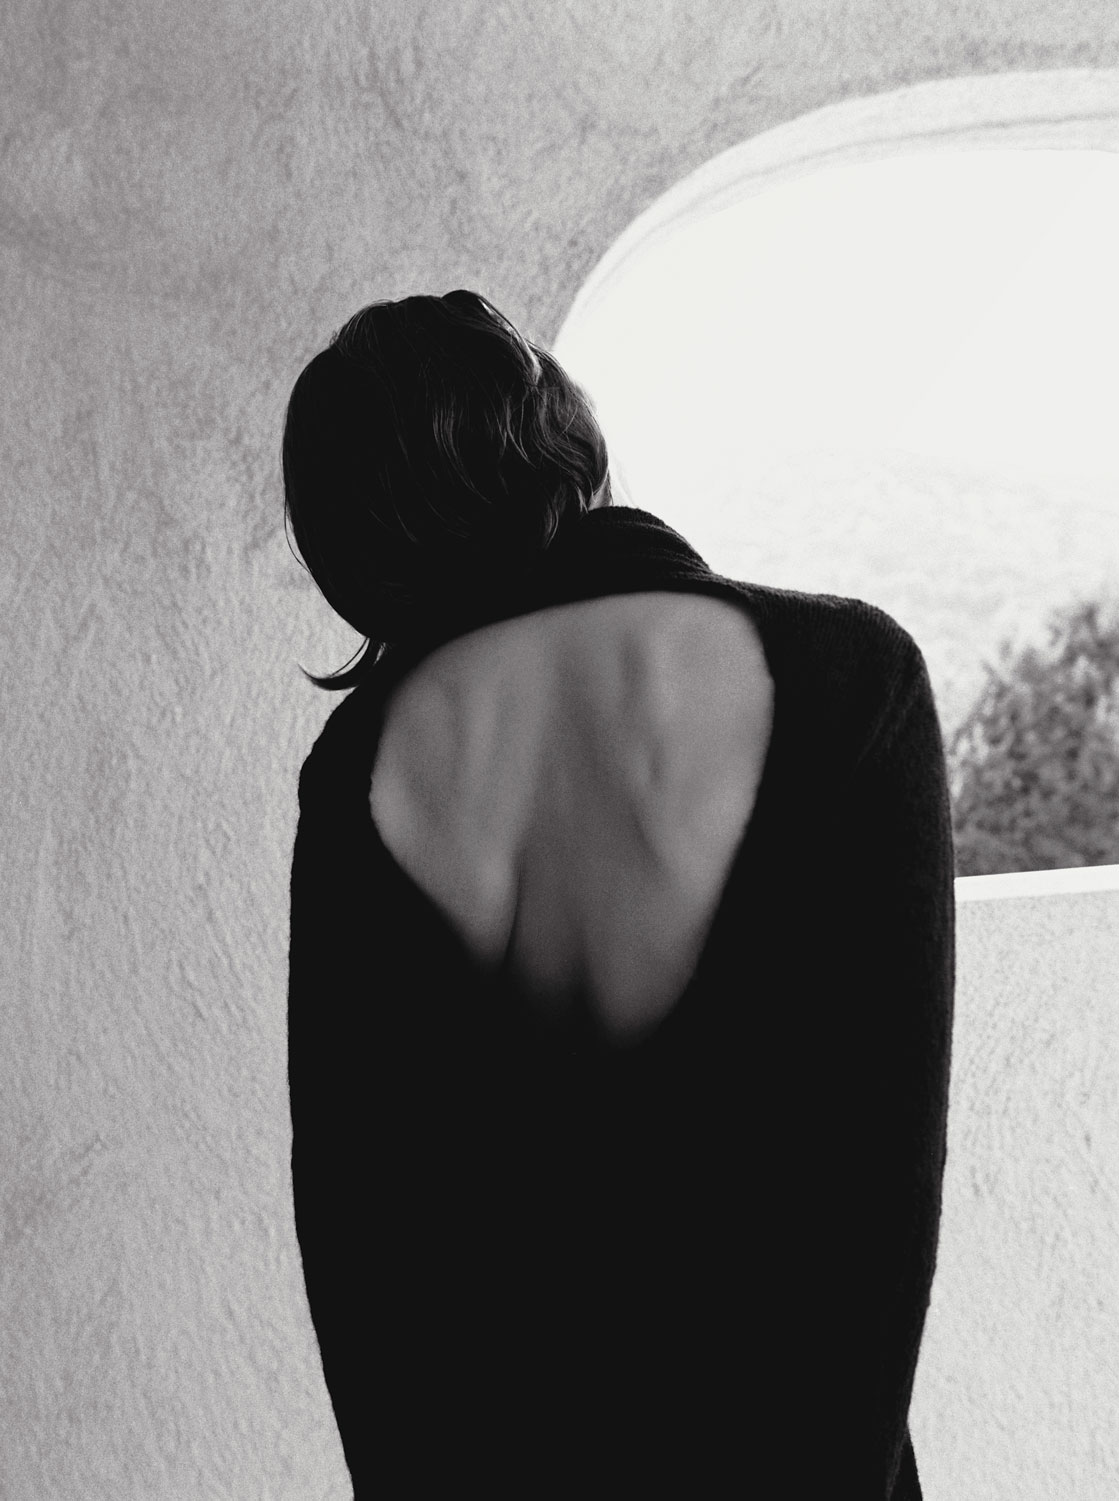 girl silhouette tumblr